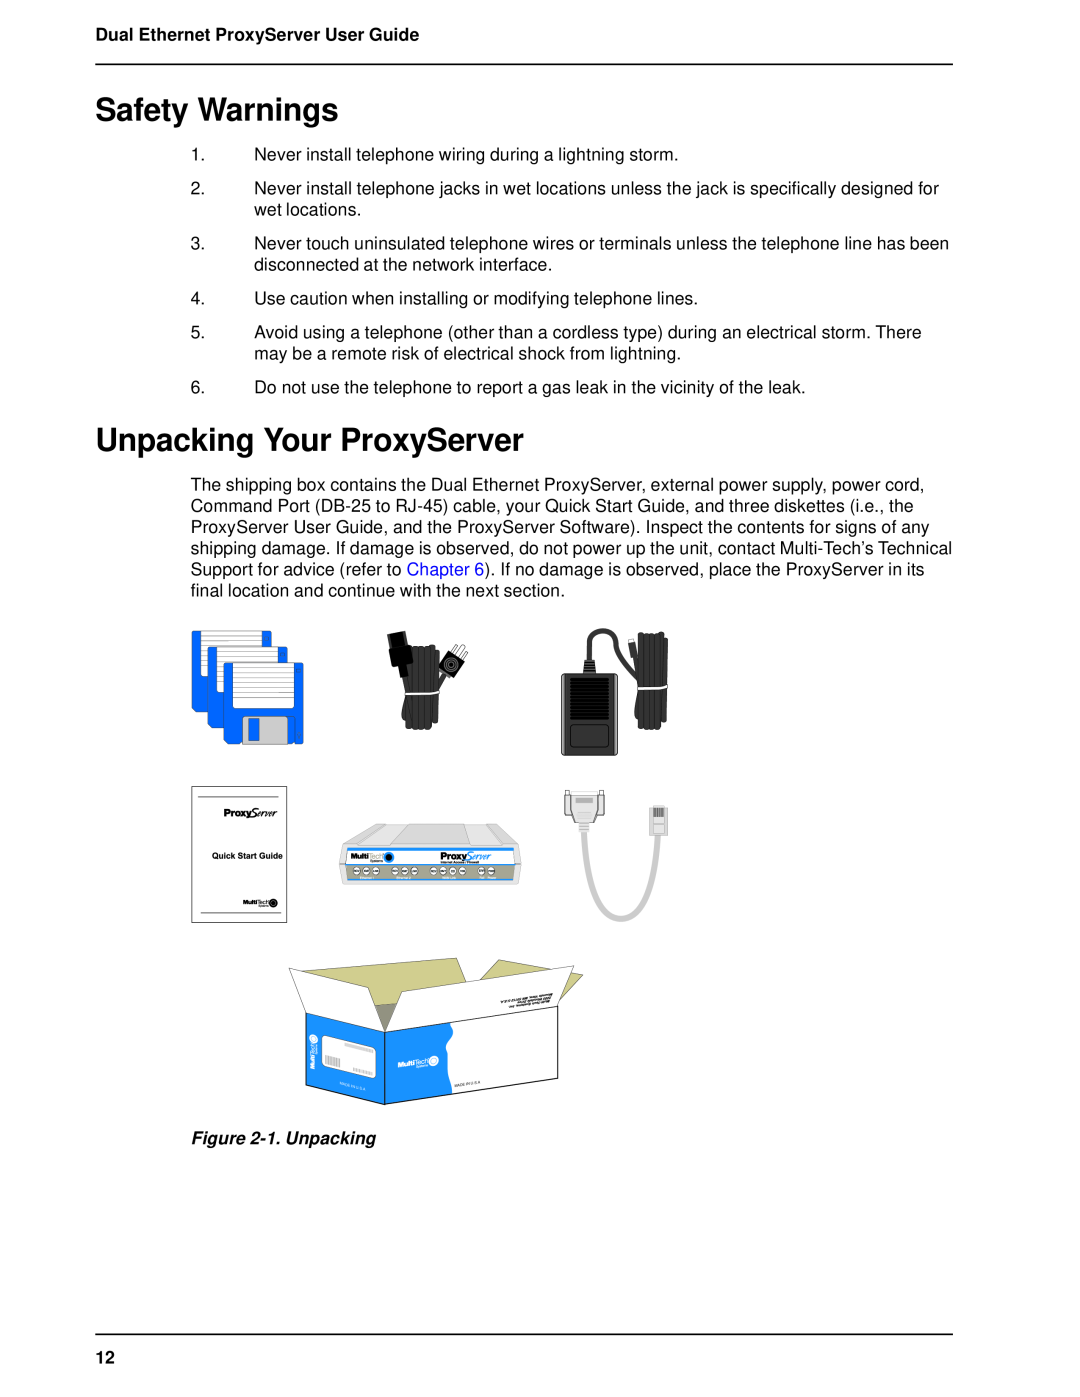 Multitech MTPSR1-120 manual Safety Warnings, Unpacking Your ProxyServer, 1. Unpacking, Dual Ethernet ProxyServer User Guide 